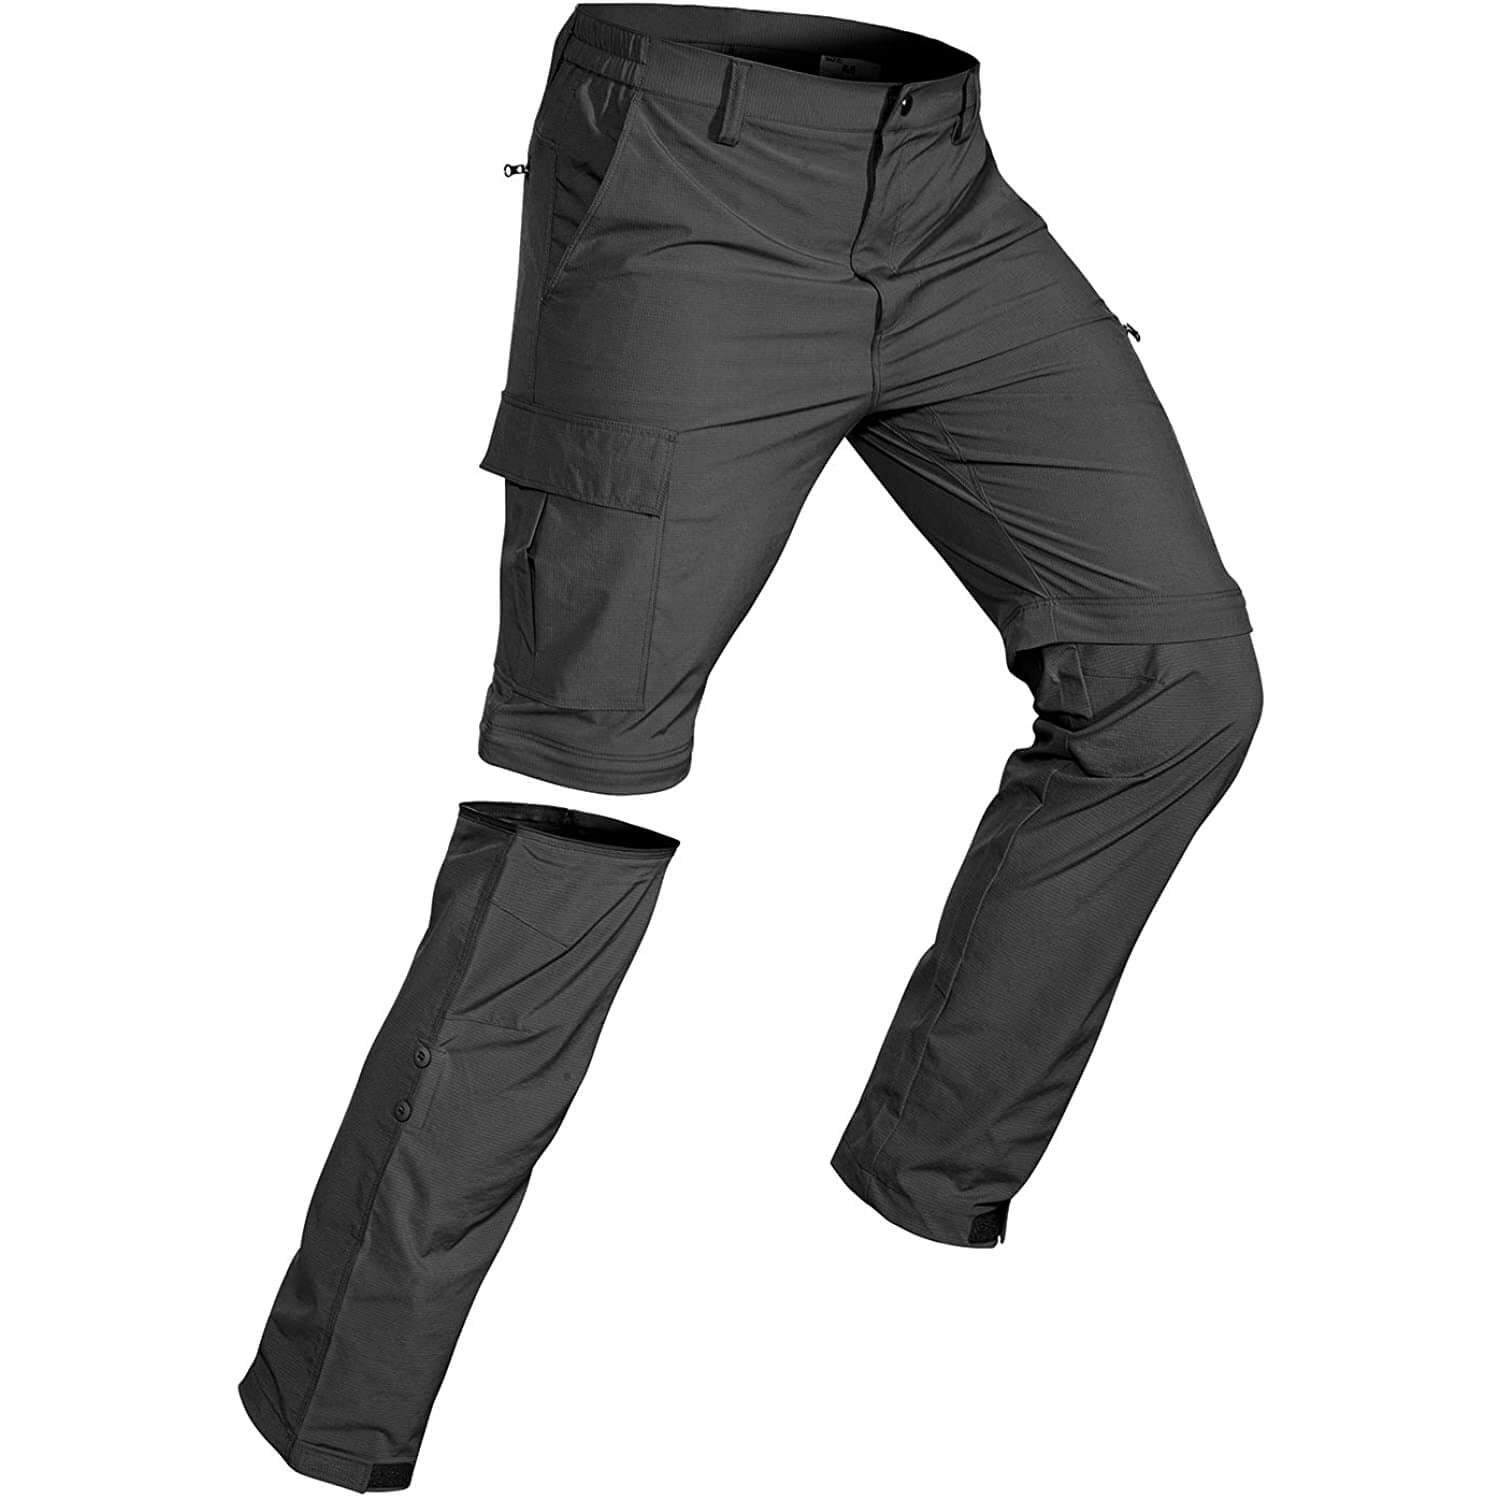 Wespornow Men's-Convertible-Hiking-Pants Quick Dry Lightweight Zip Off Breathable Cargo Pants for Outdoor, Fishing, Safari (Grey, Medium)